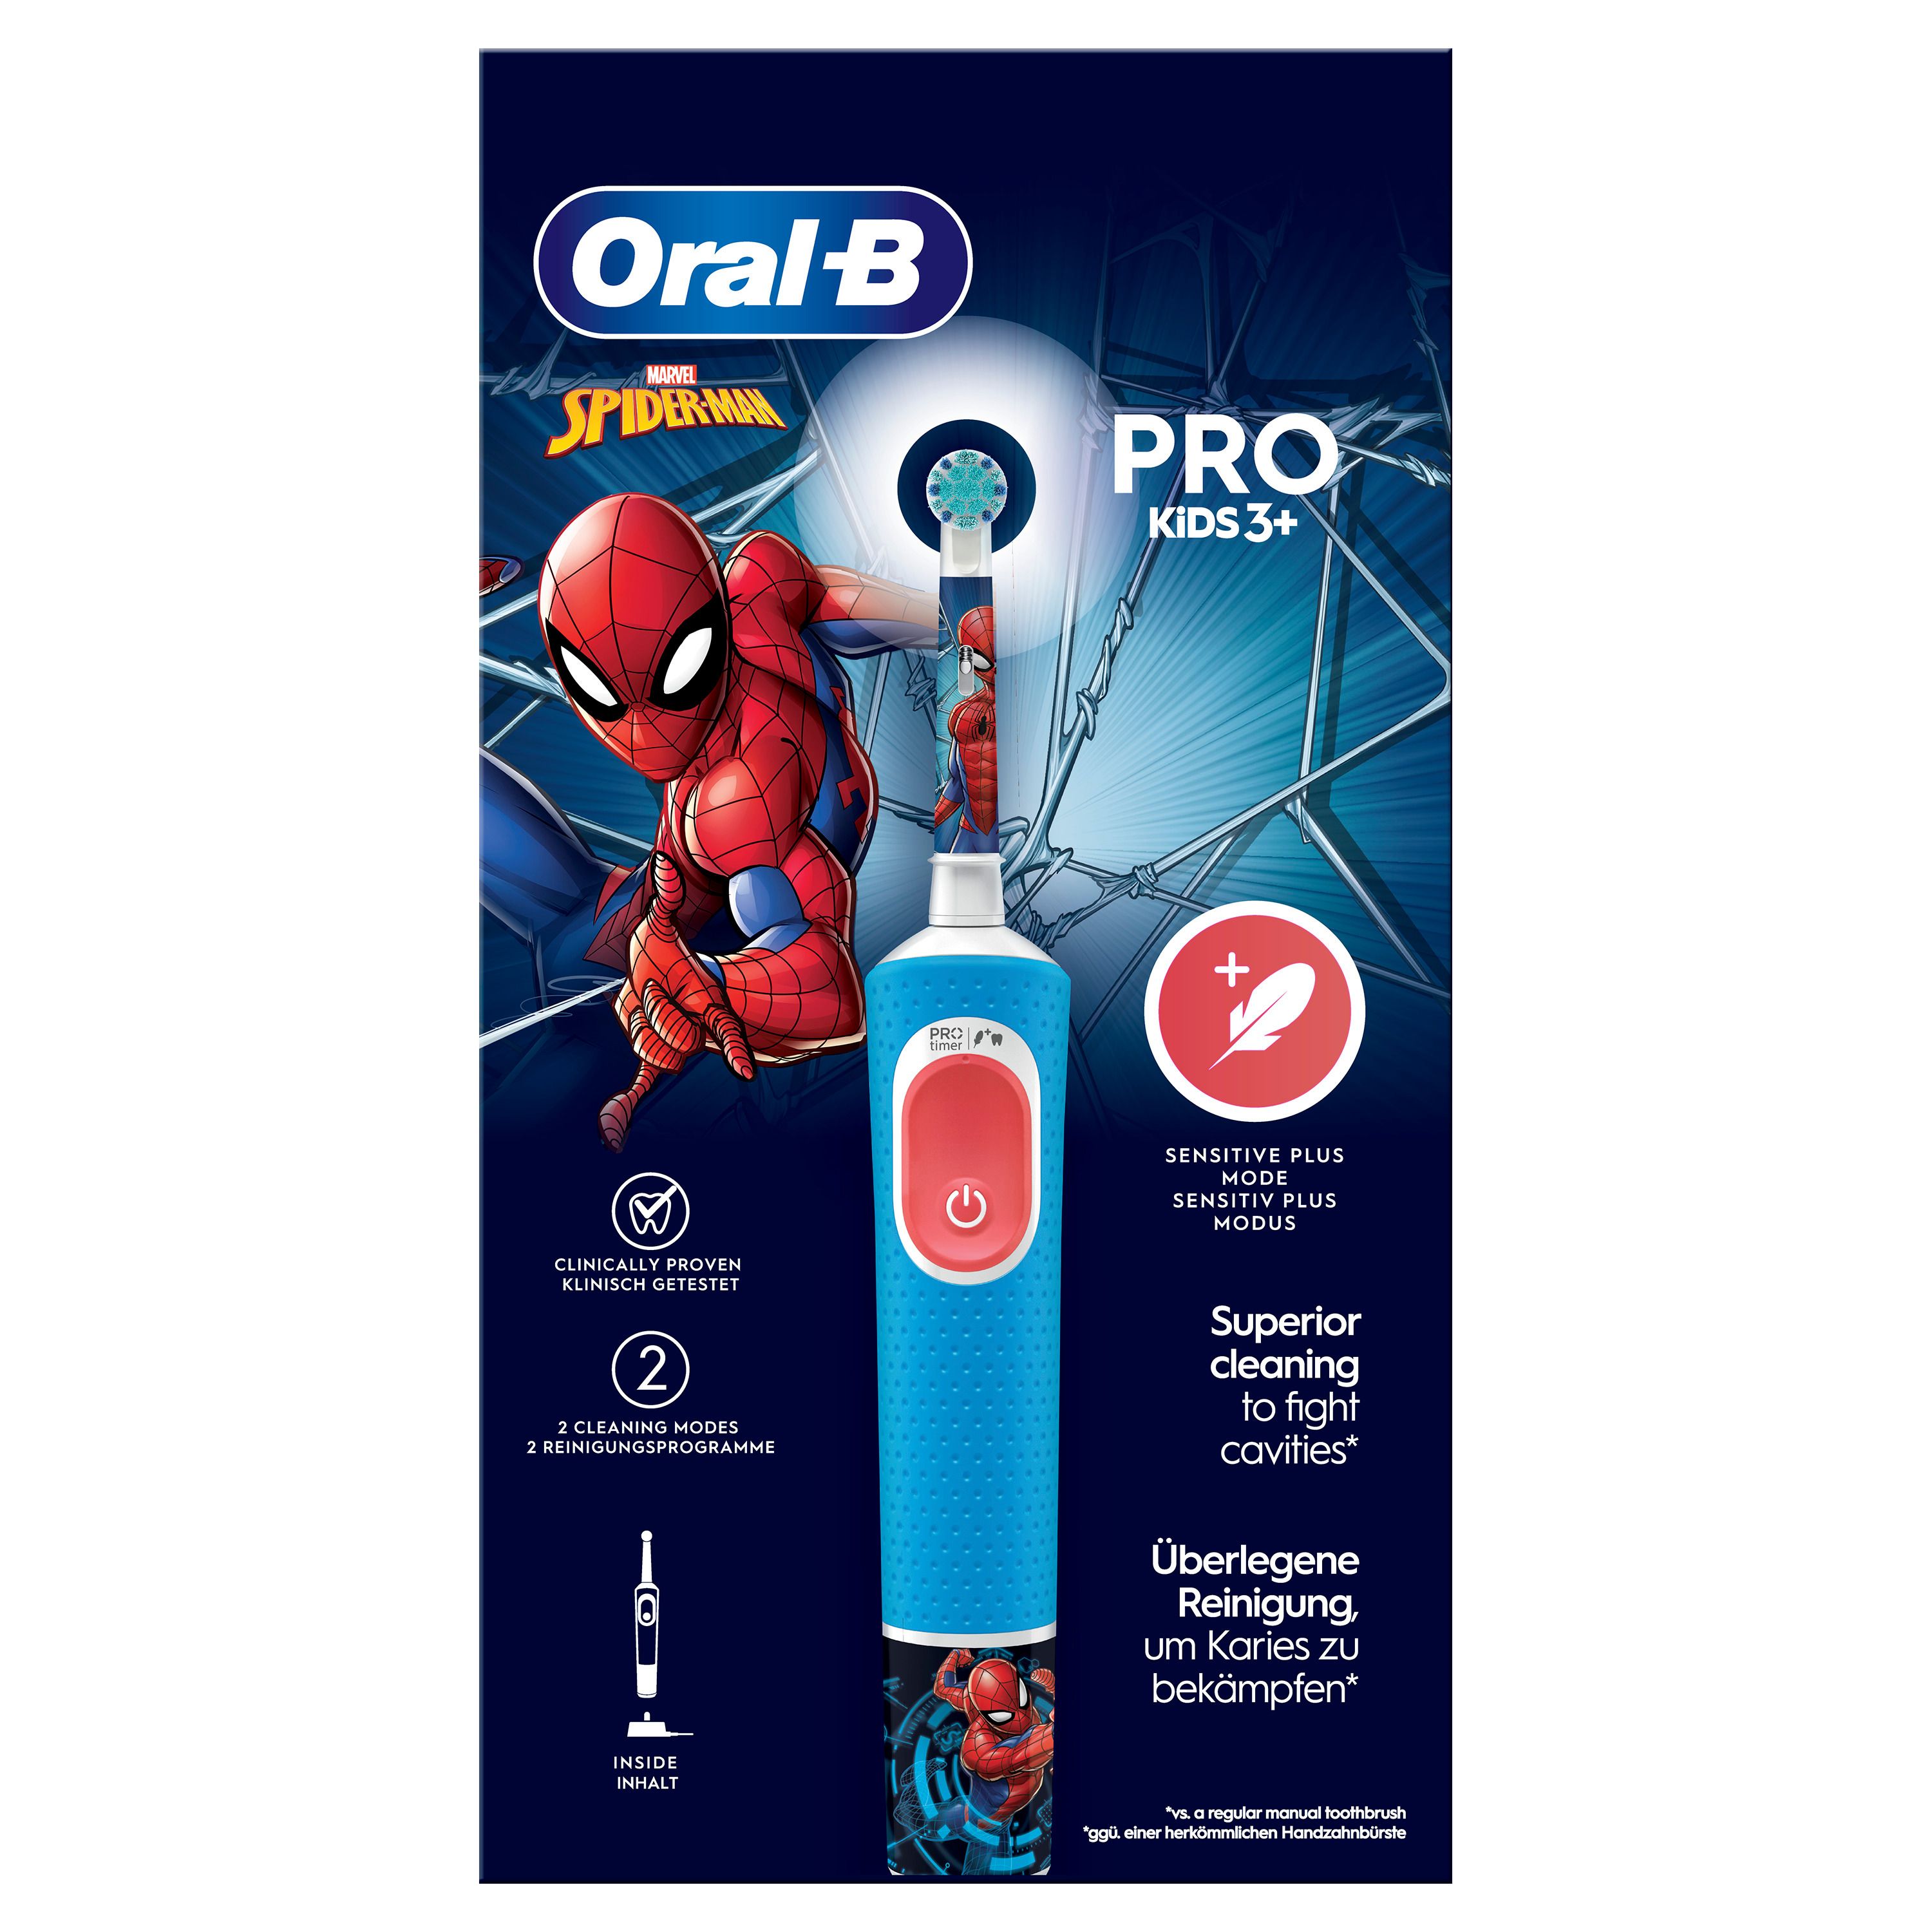 Oral-B - Elektrische Zahnbürste "Vitality Pro - Kids" Spiderman